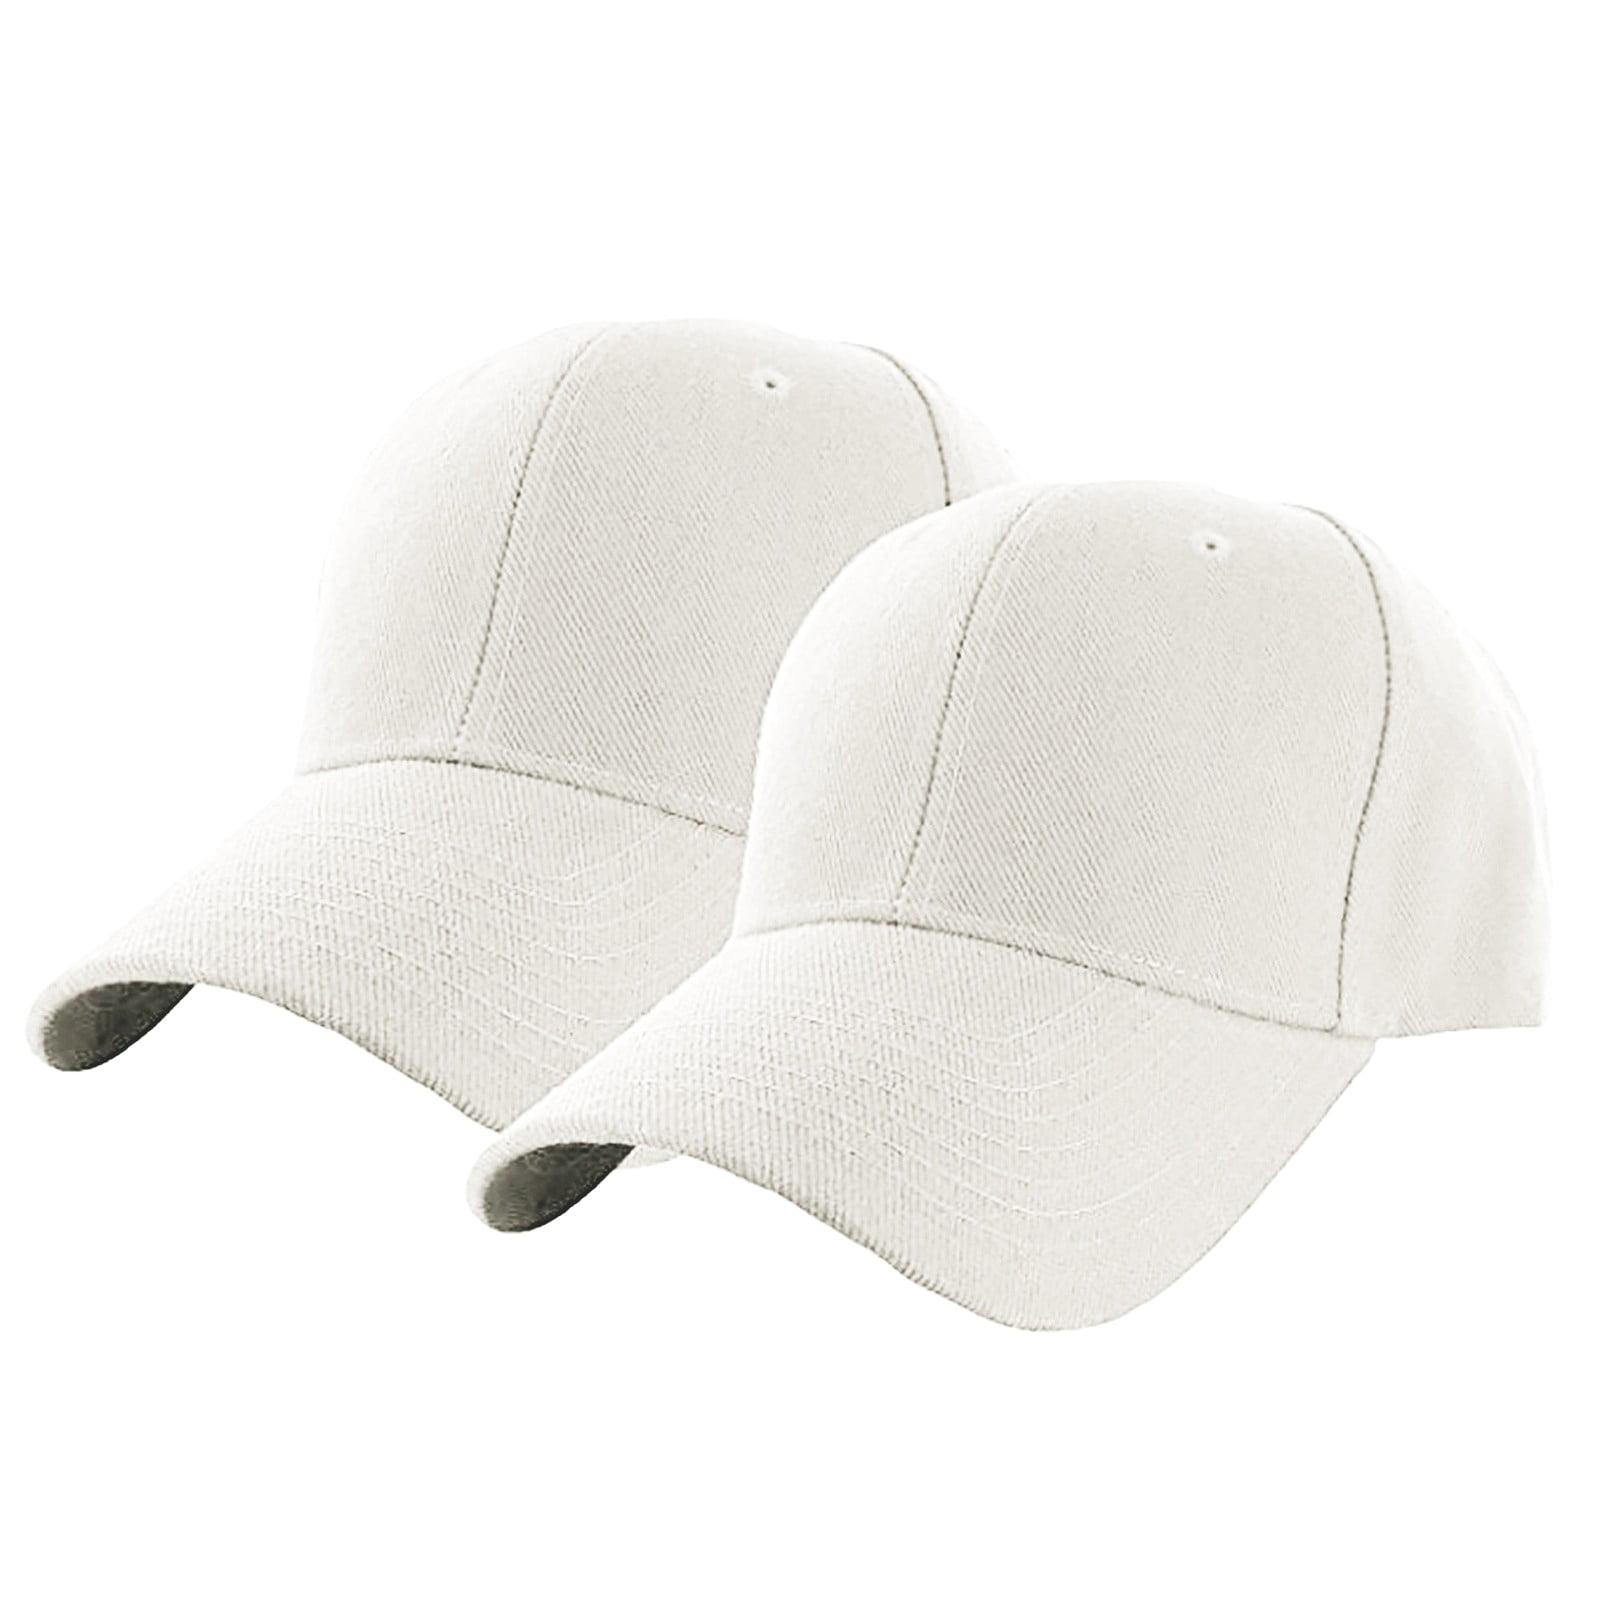 Baseball Caps hat Mens Women Solid Cotton sports Cap Adjustable Summer Hats 